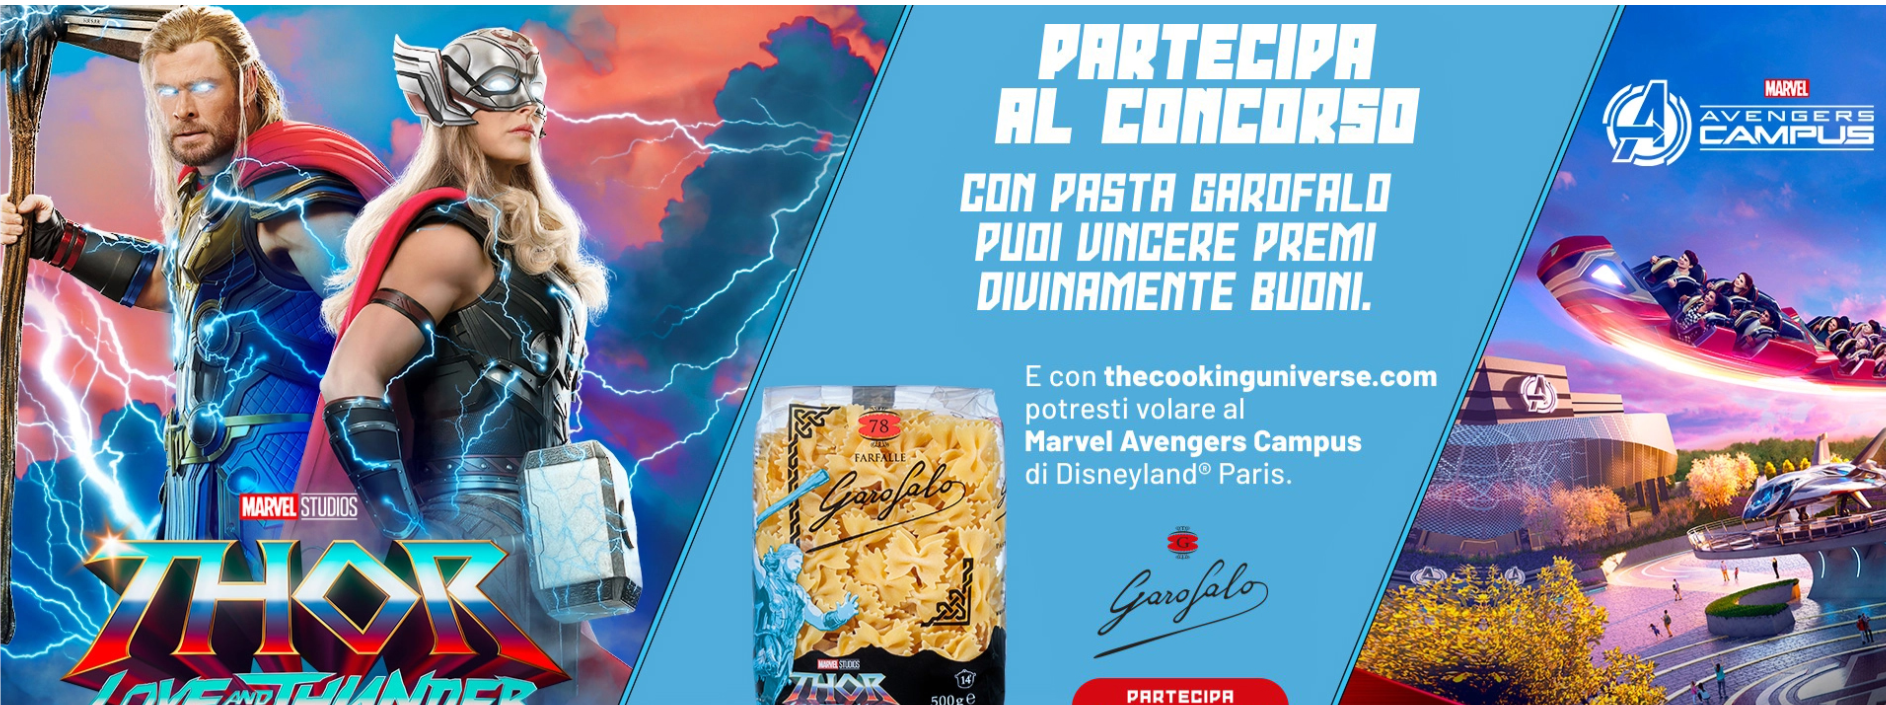 Contest pasta garofalo love and thunder